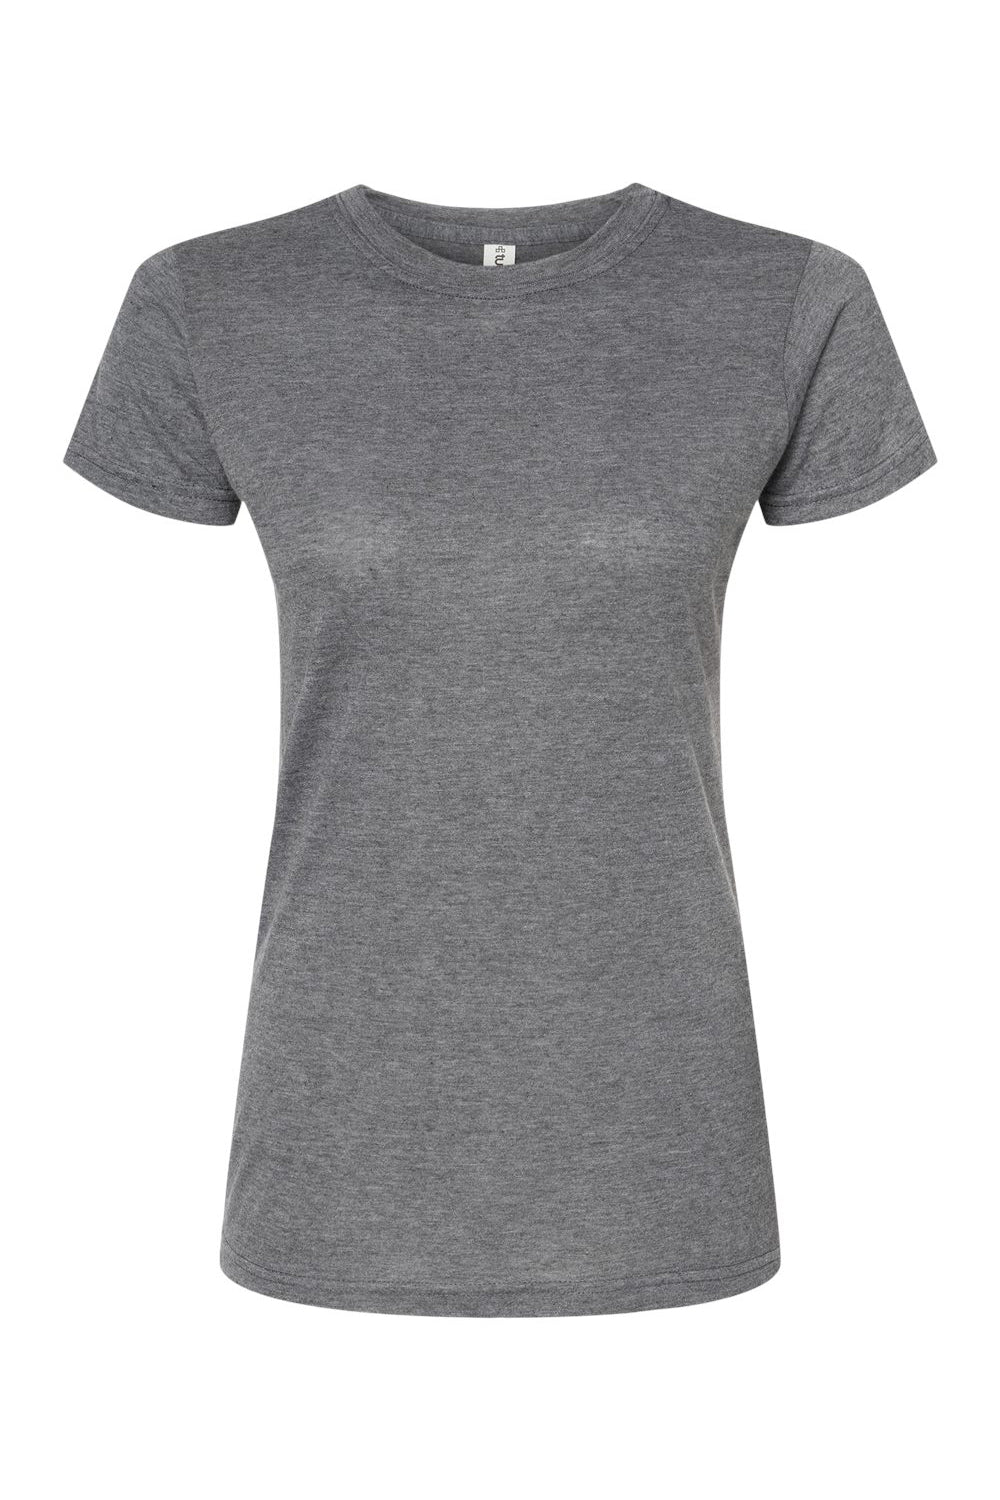 Tultex 240 Womens Poly-Rich Short Sleeve Crewneck T-Shirt Heather Charcoal Grey Flat Front